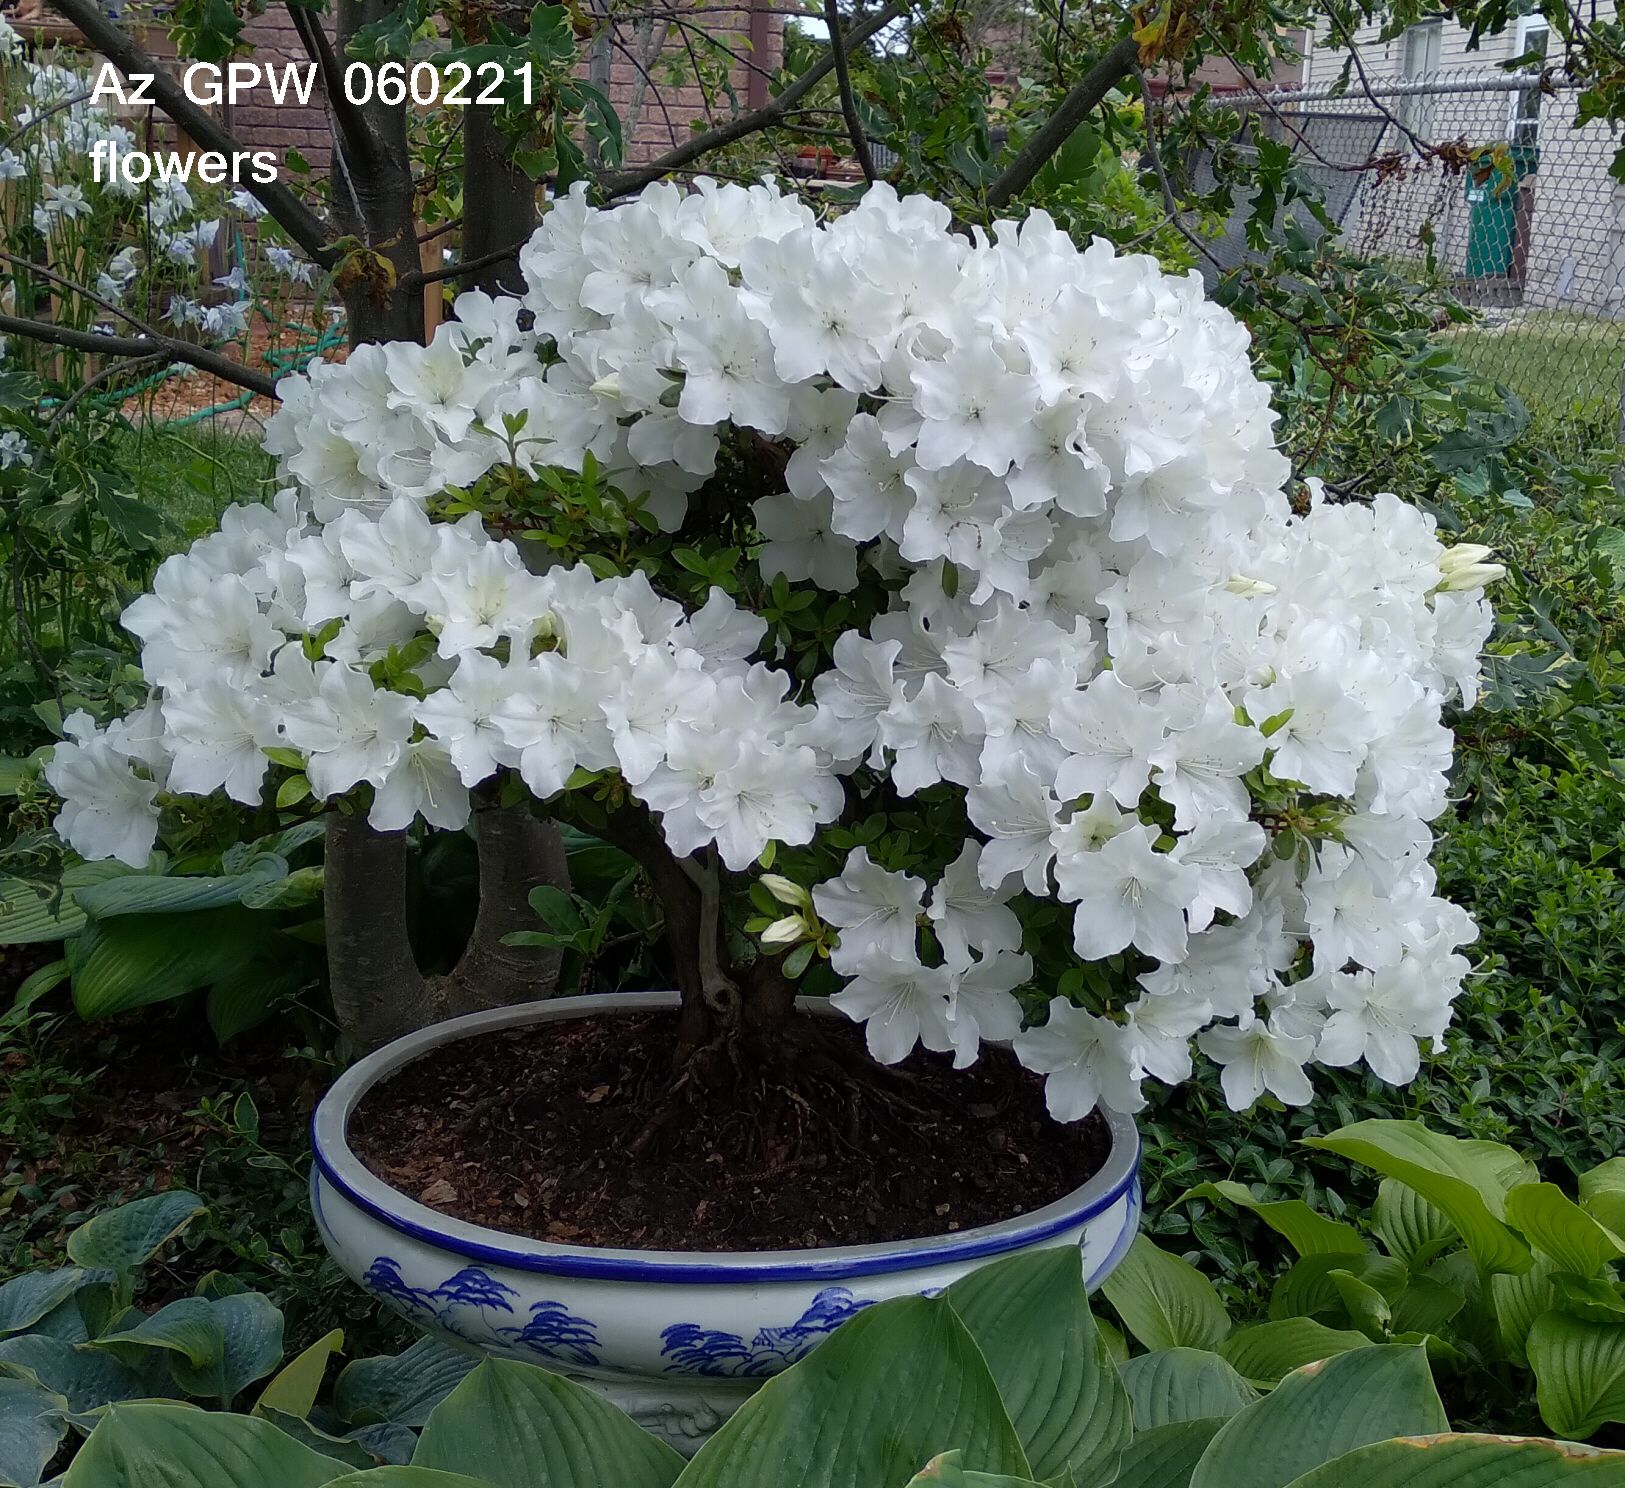 Az GPW 060221 flowering.jpg